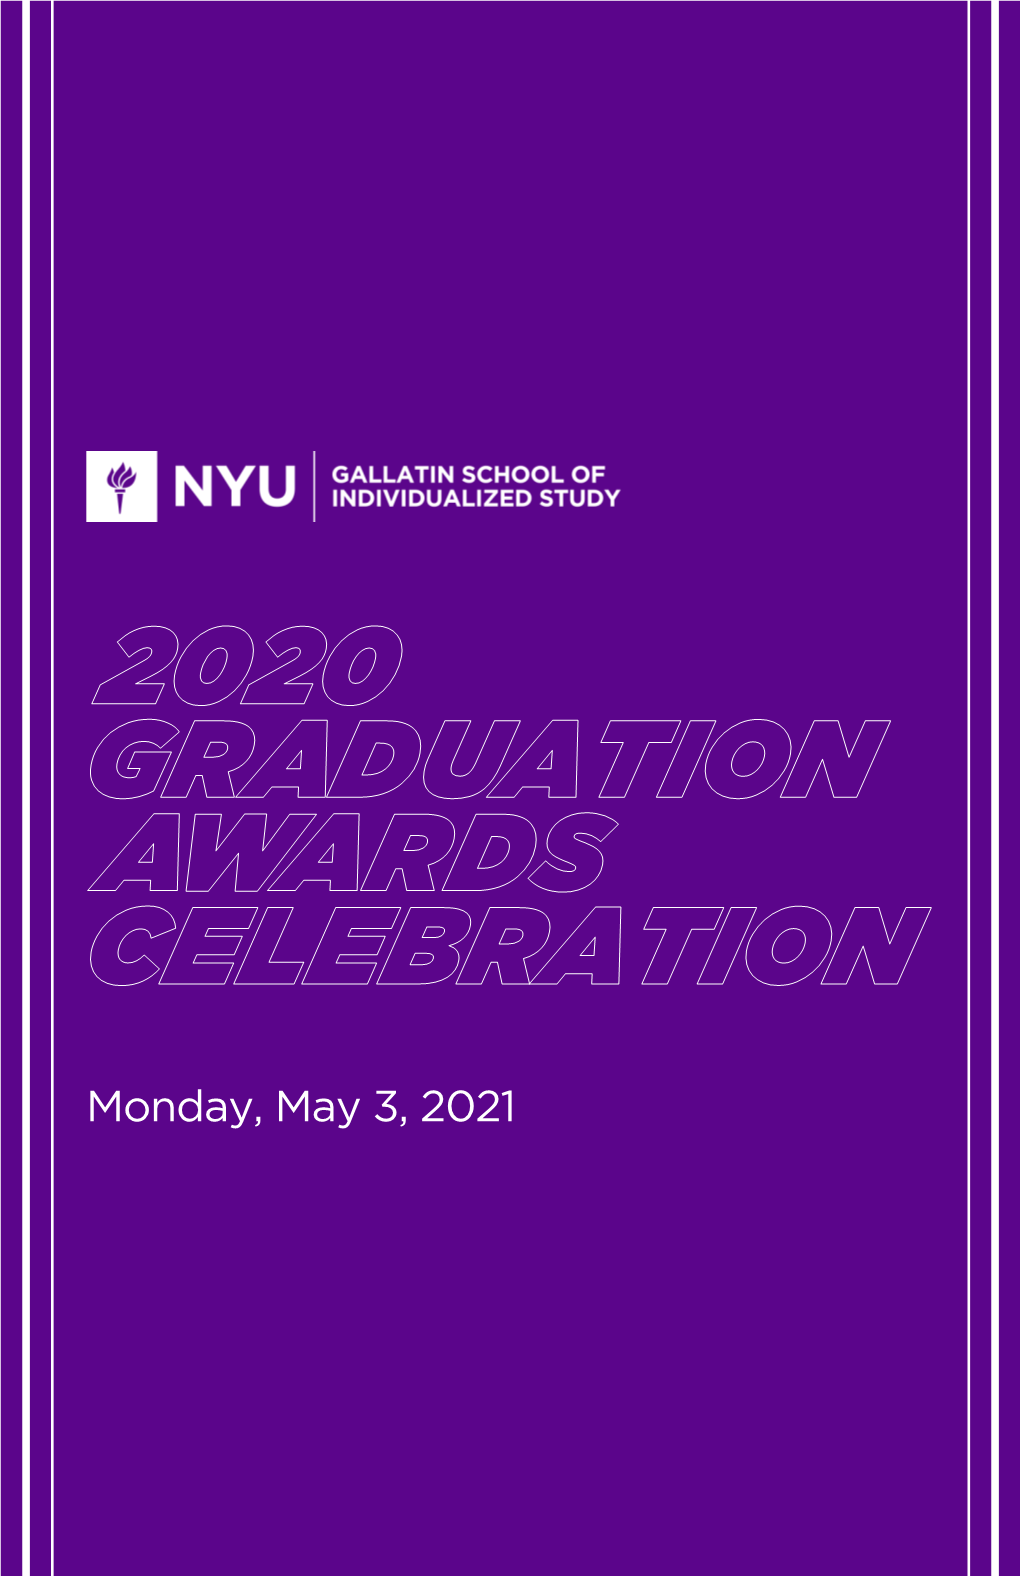 2020 Graduation Awards Celebration